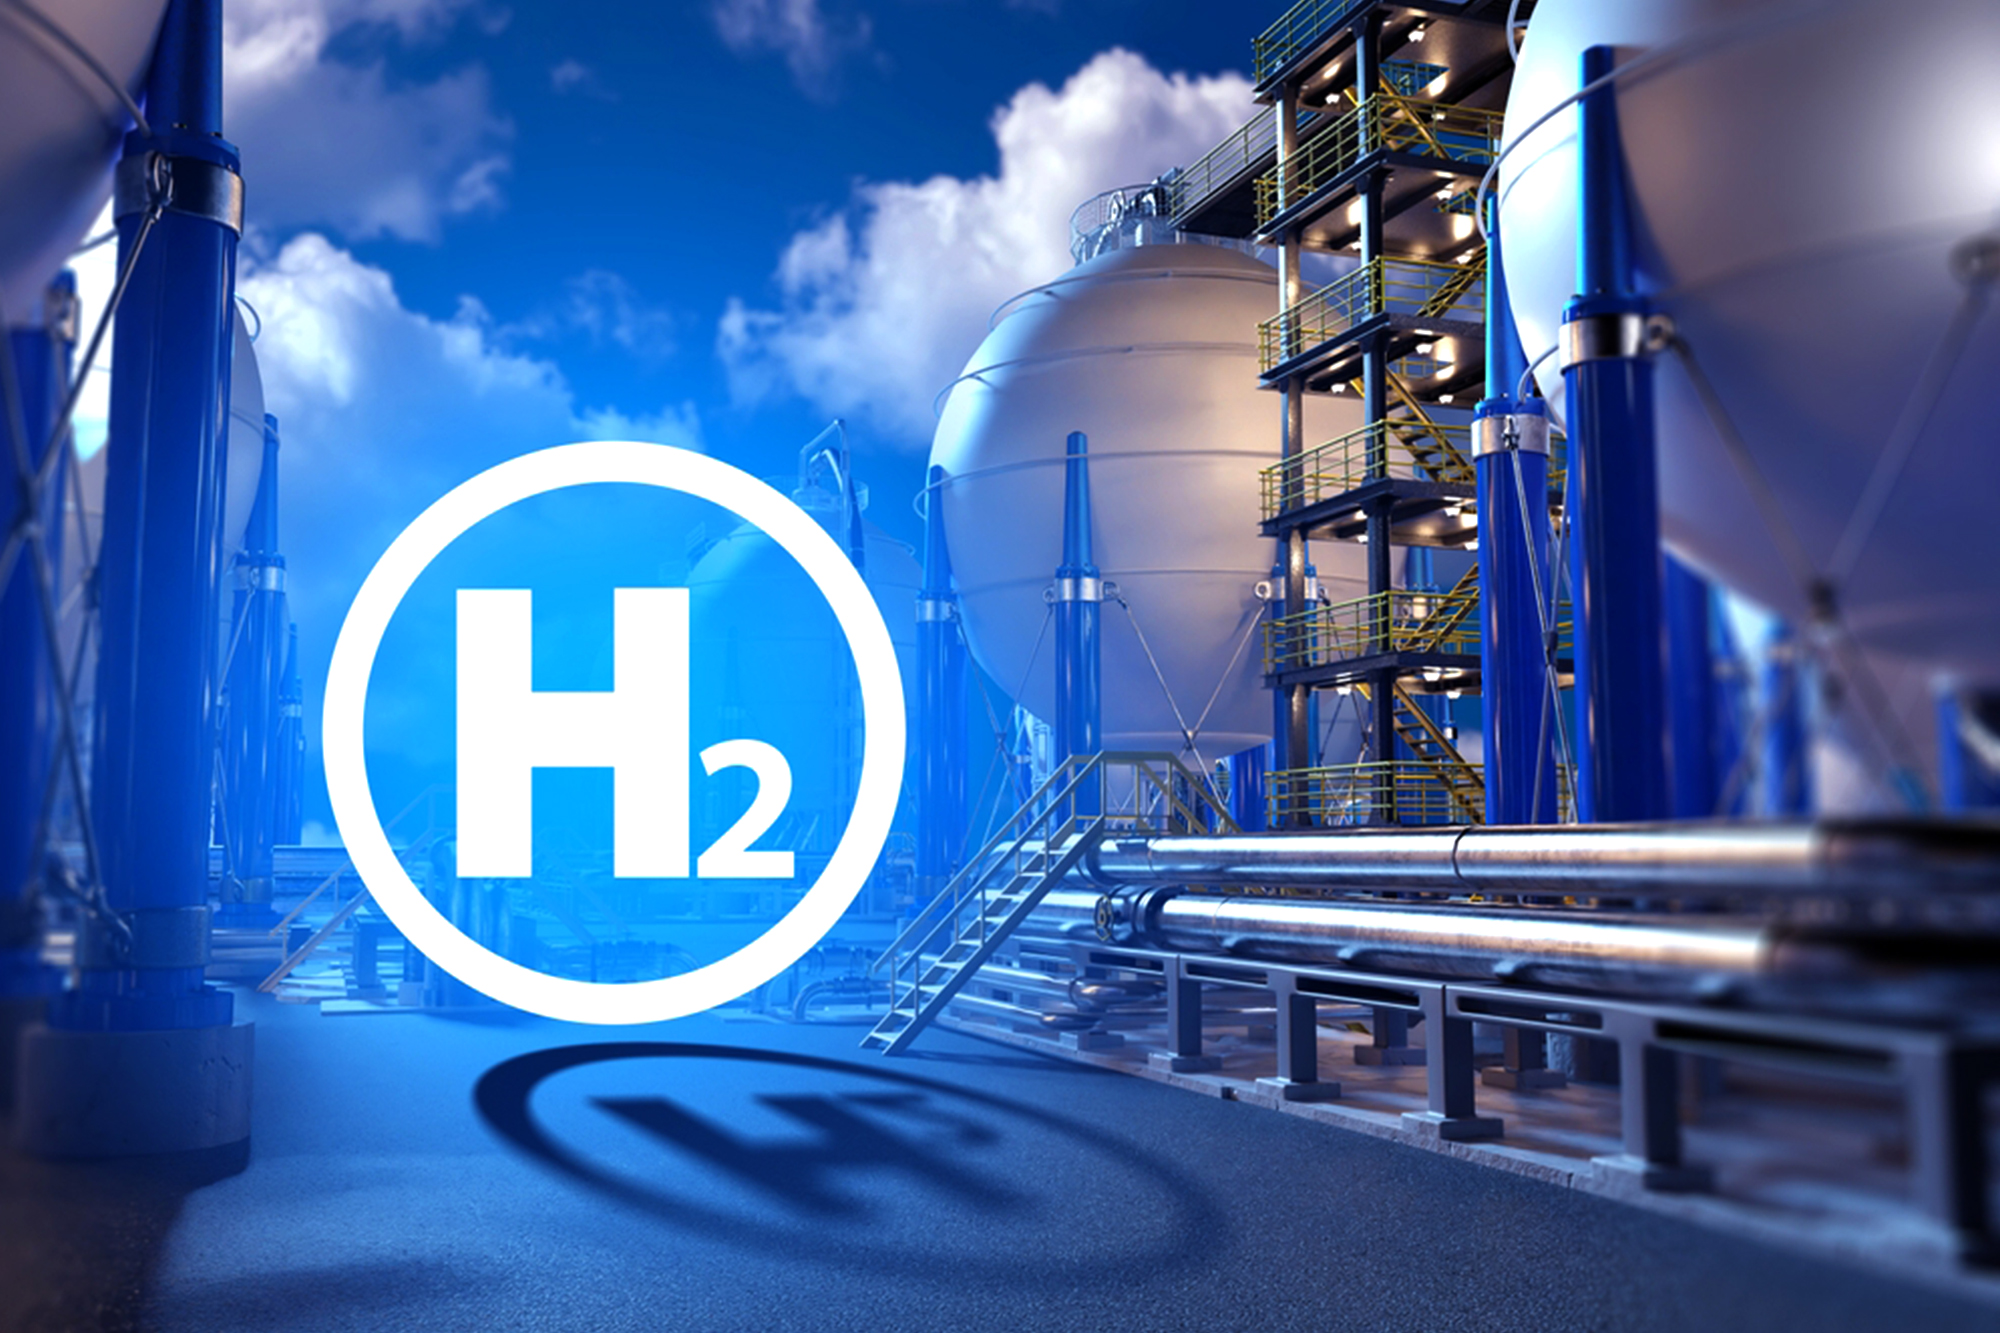 Wärtsilä launches world’s first large-scale hydrogen-ready power plant